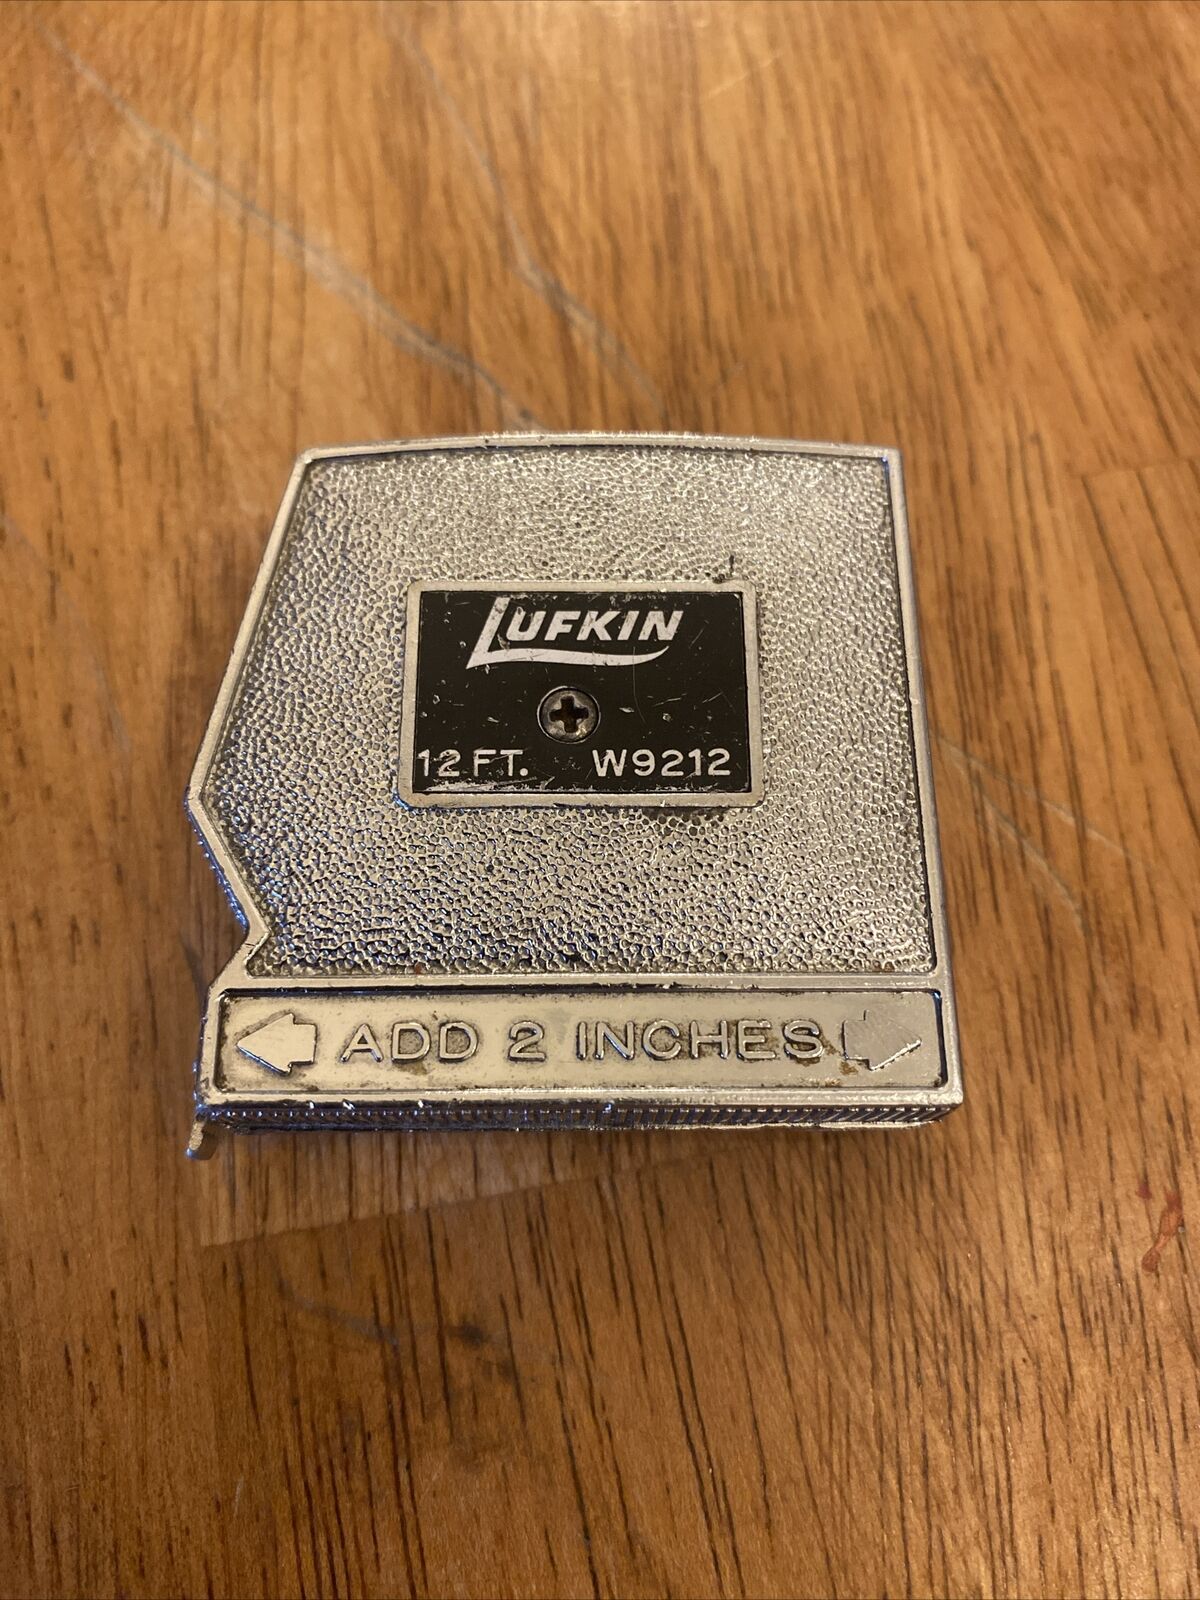 Vintage Lufkin 12ft. Tape Measure Model W9212